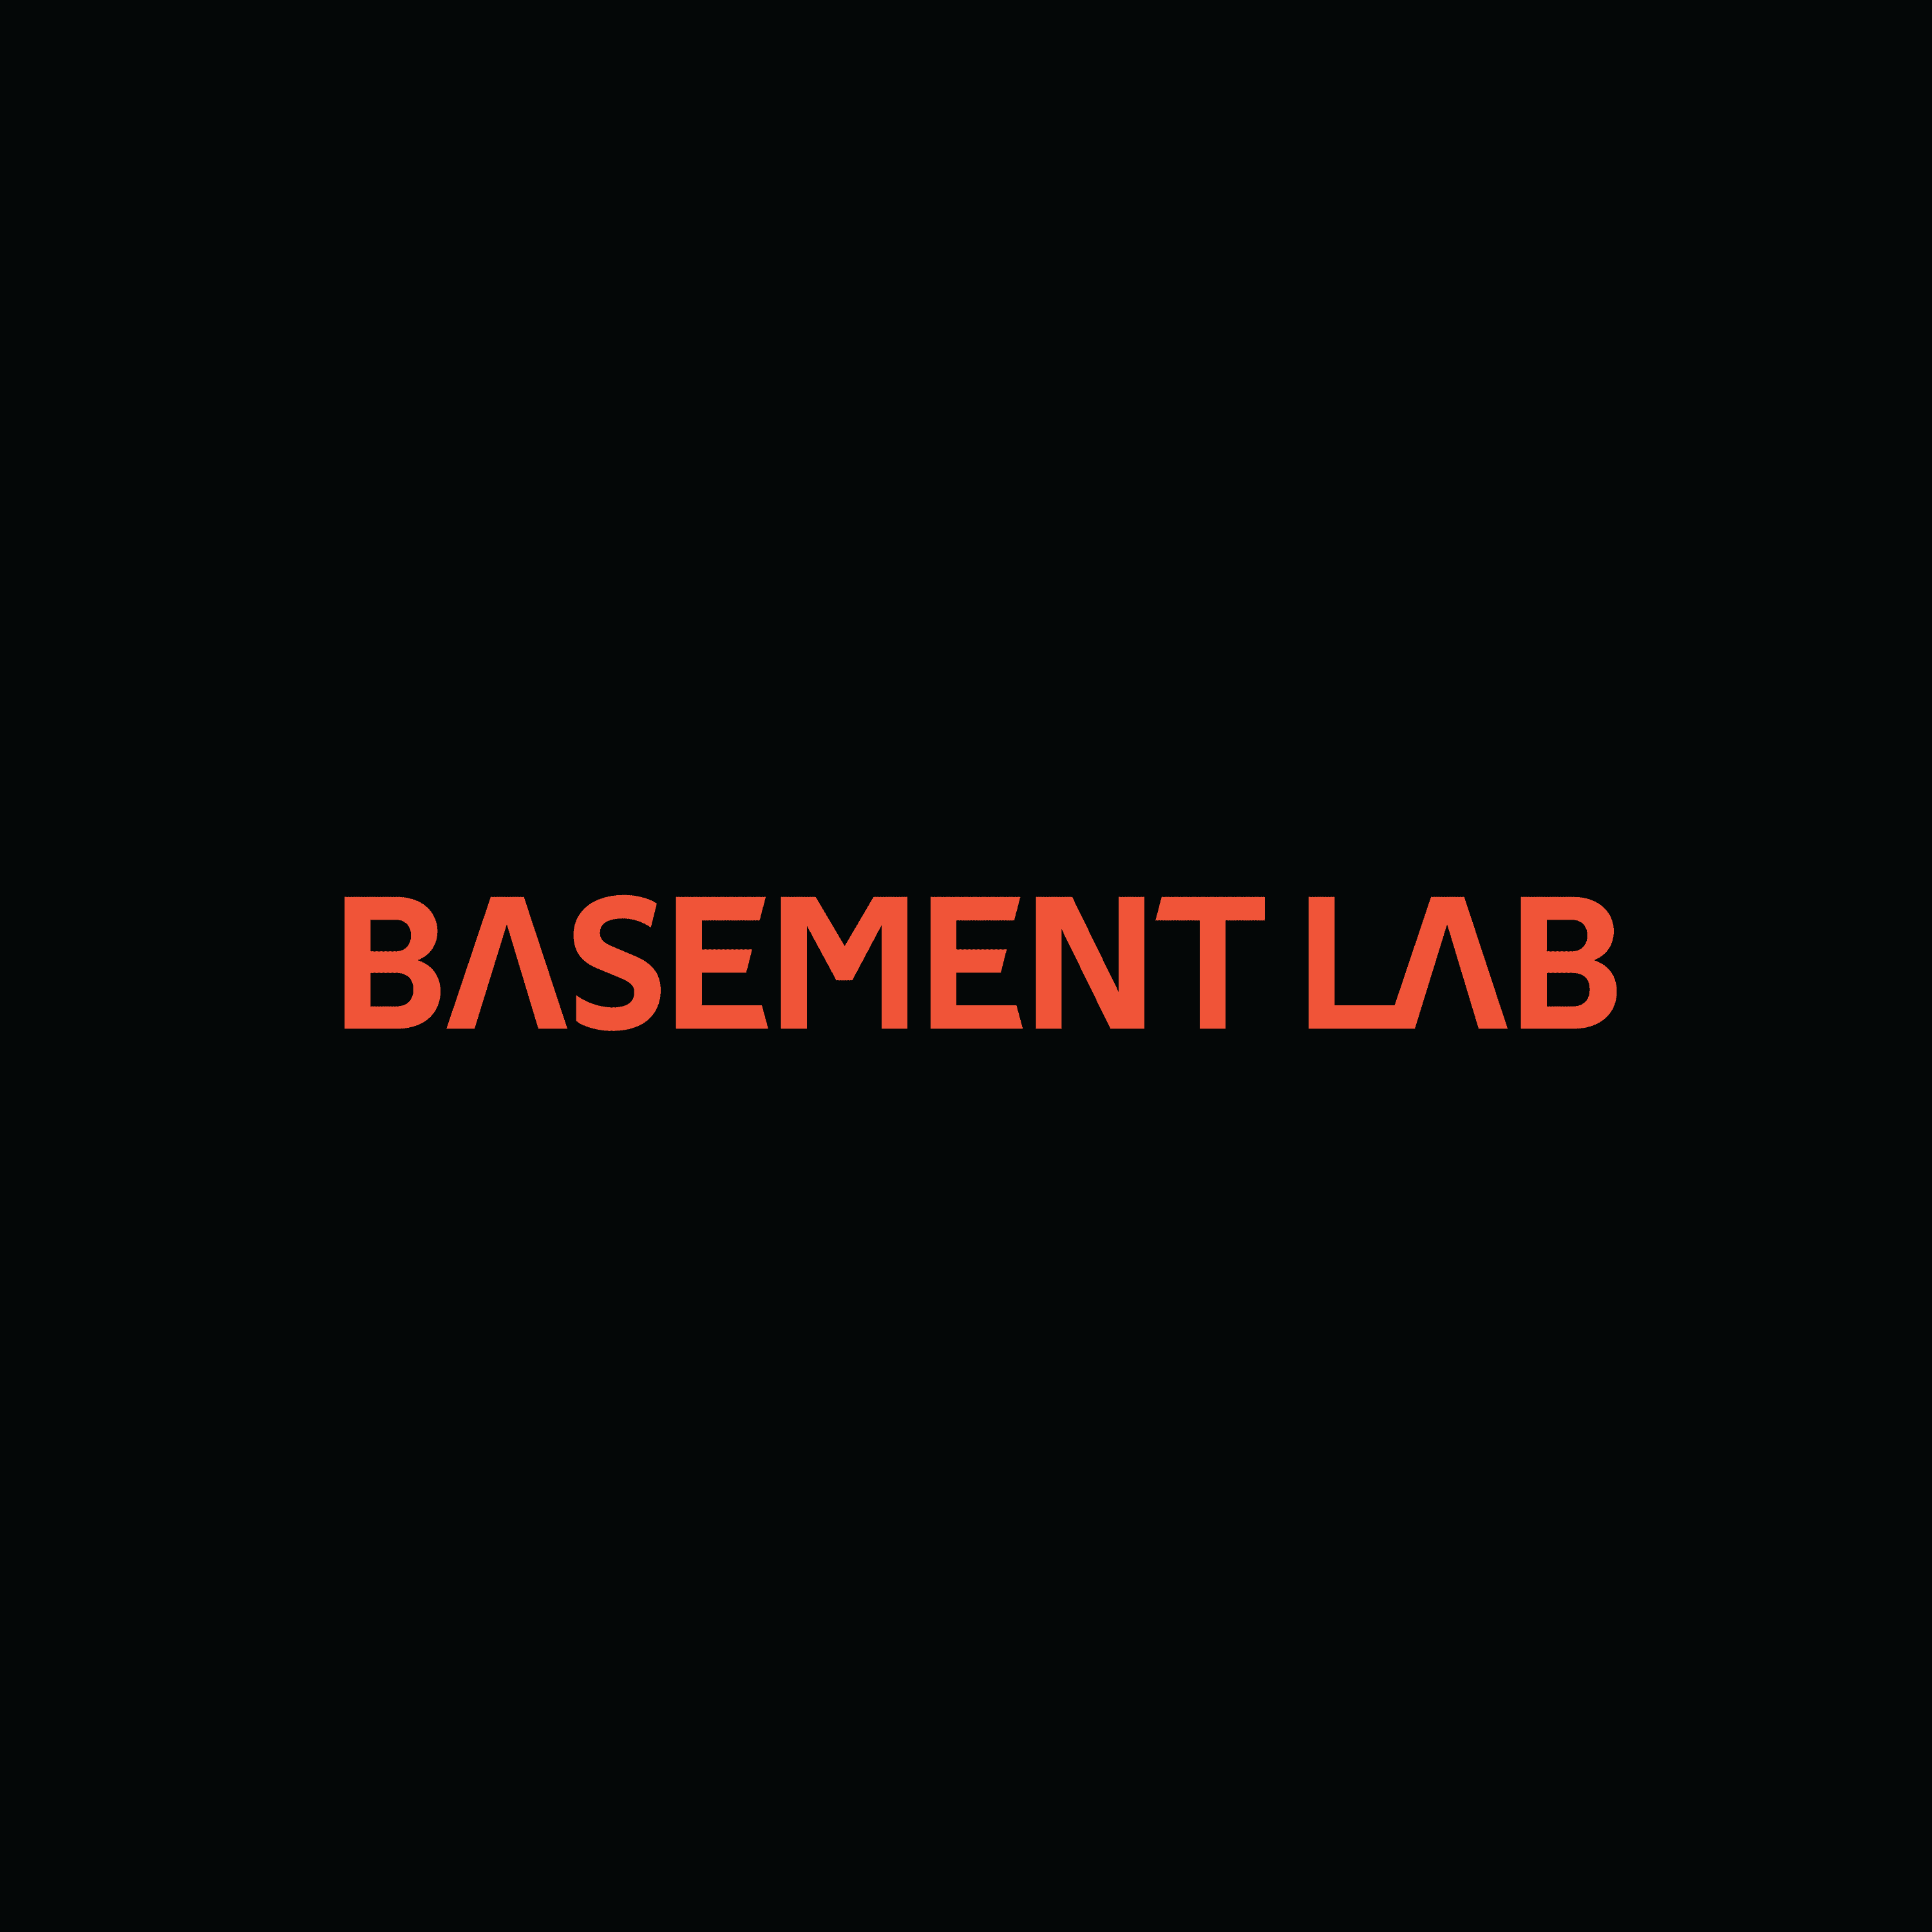 BasementLab バナー